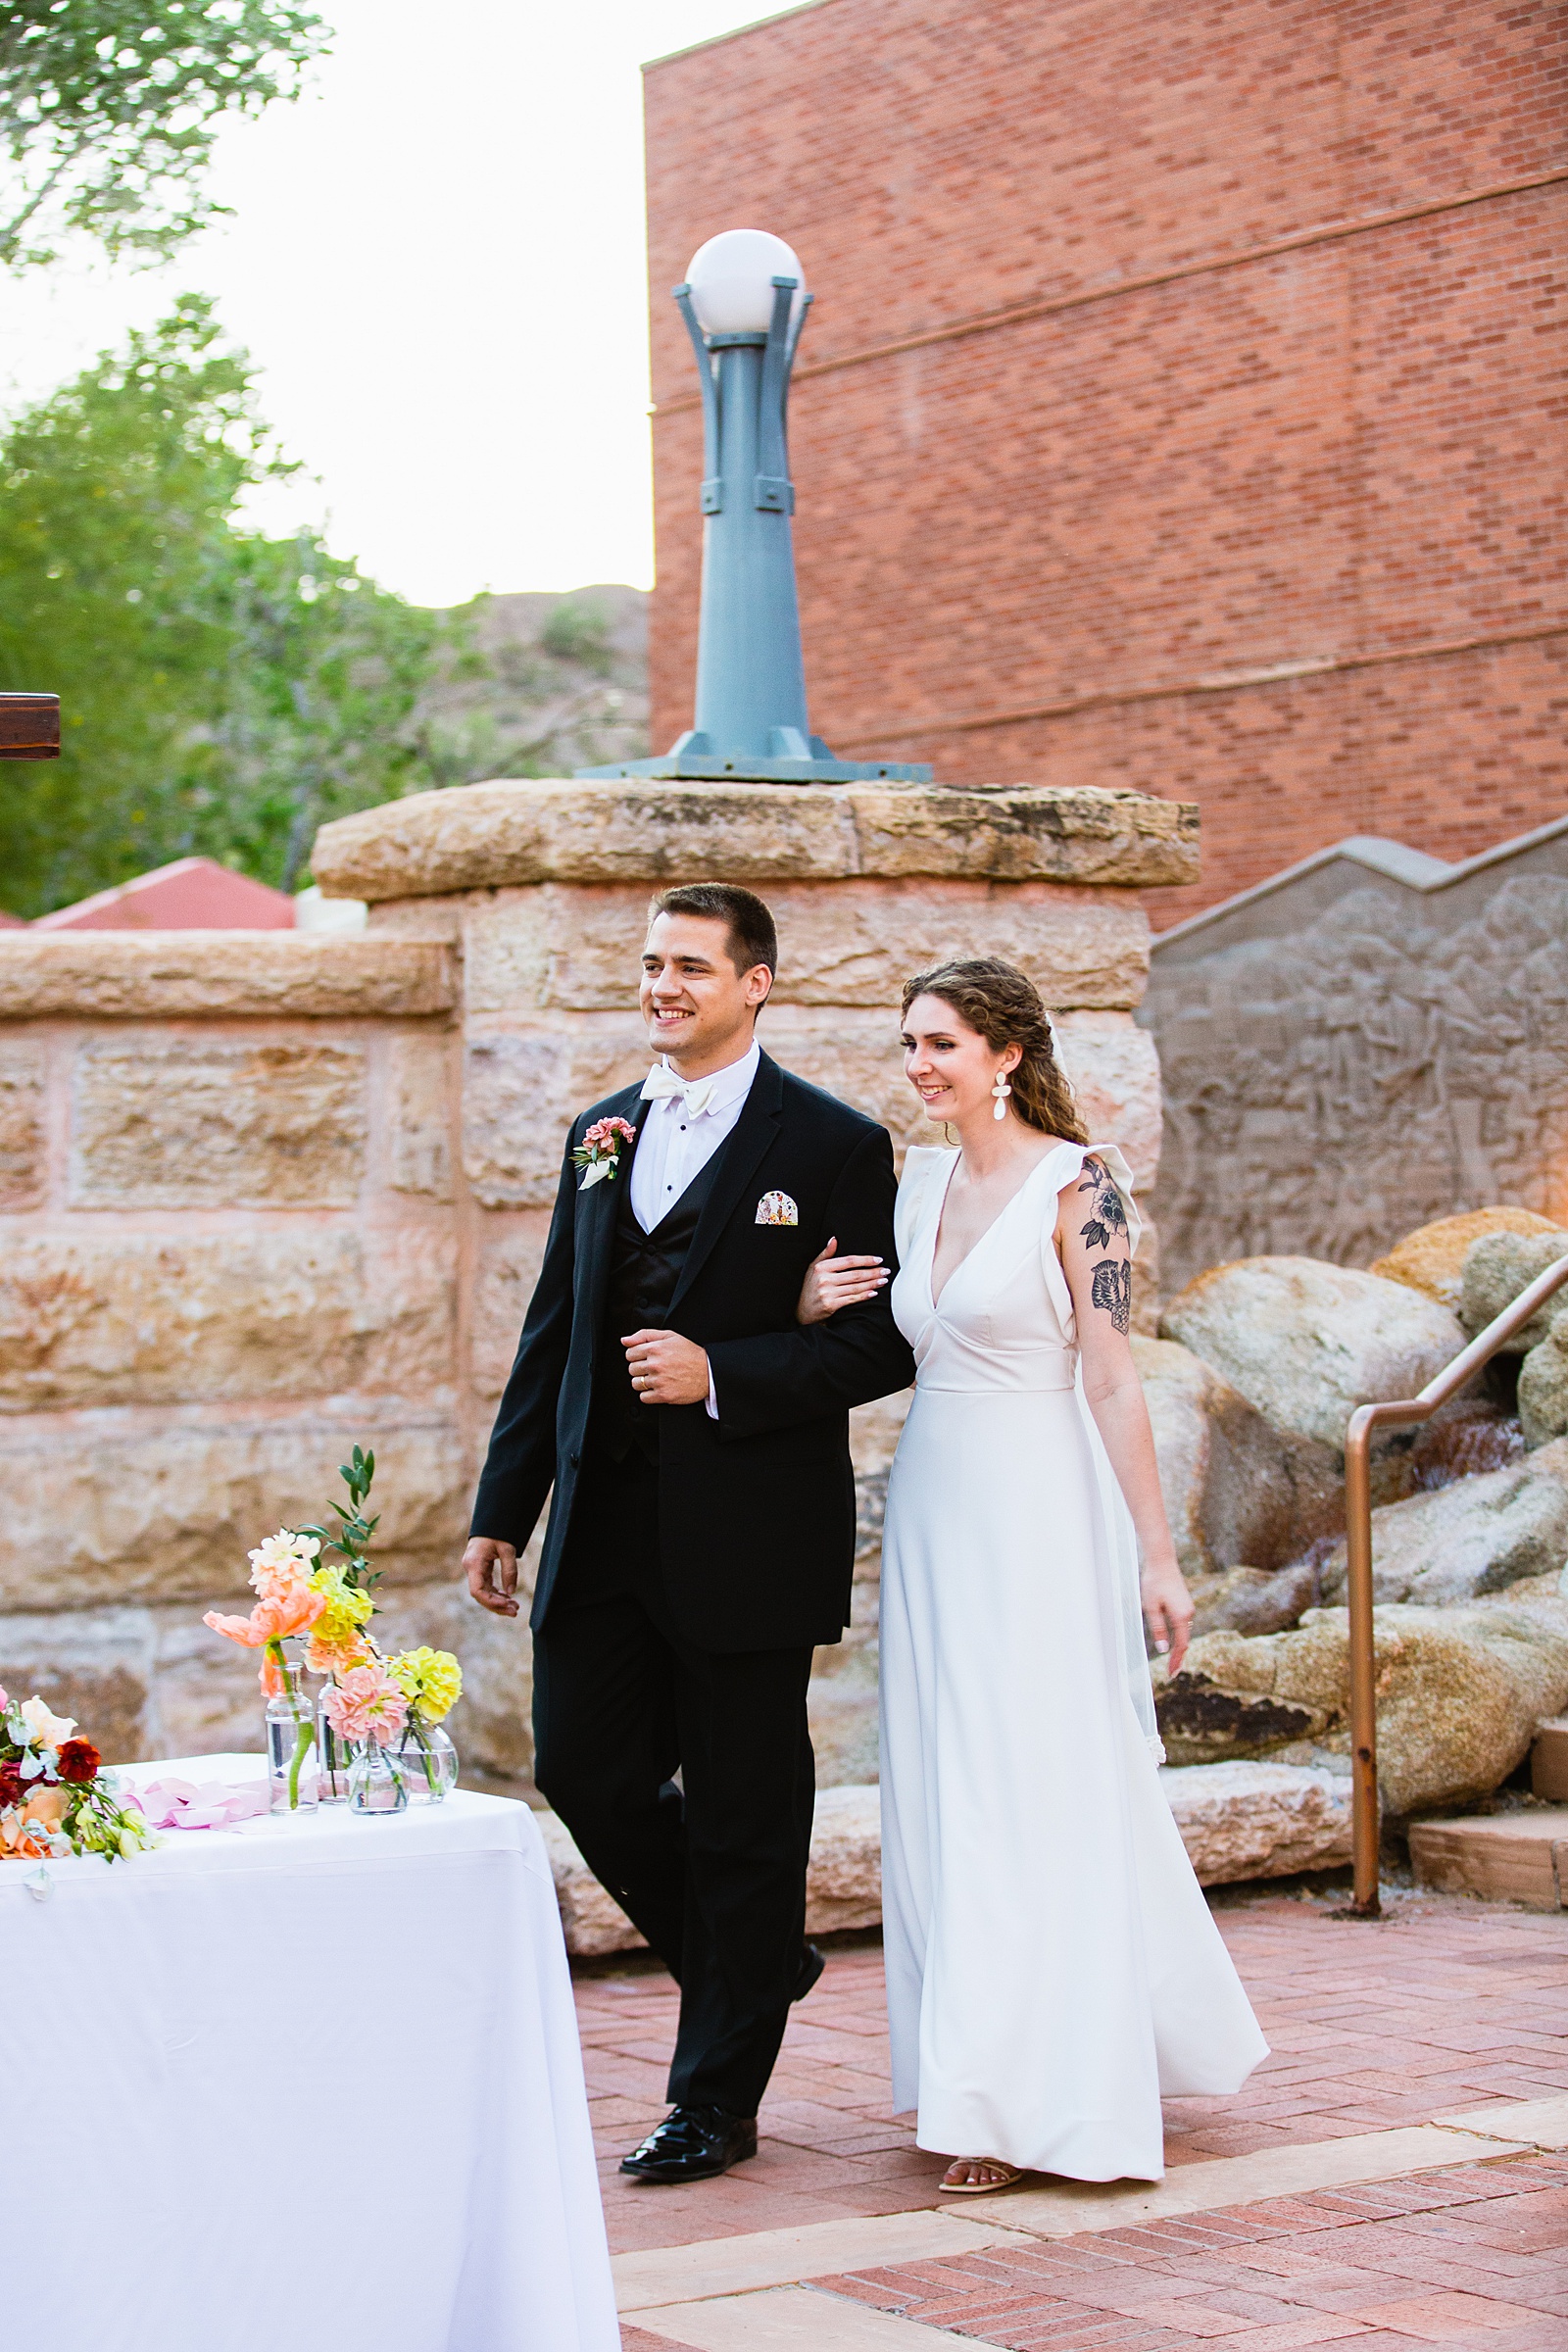 Couple's grand entrance at Arizona Historical Society wedding reception by Tempe wedding photographer PMA Photography.